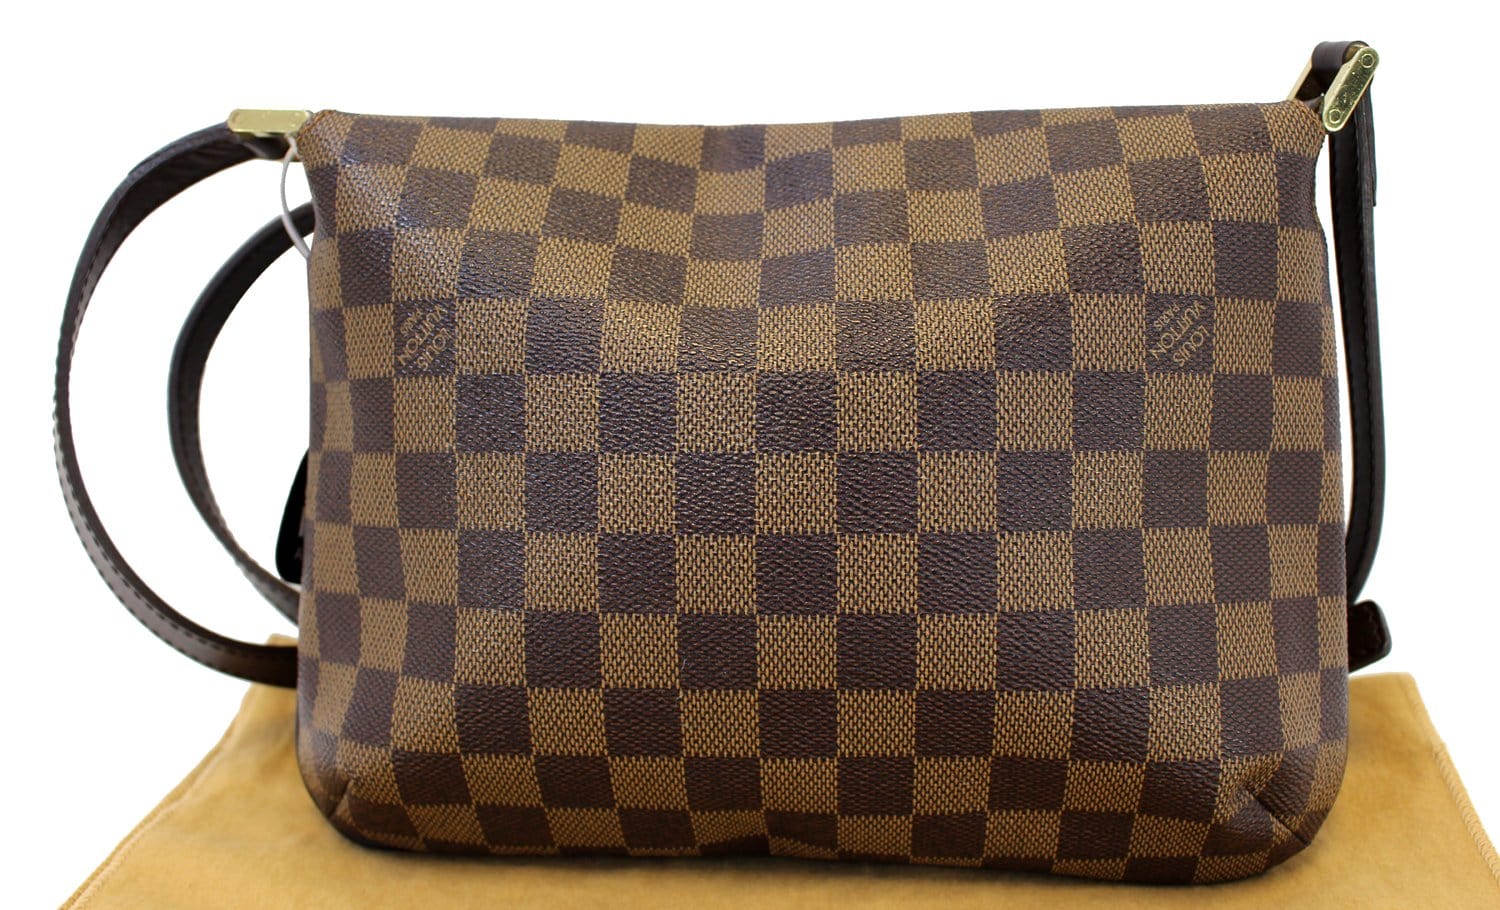 Louis Vuitton Damier Ebene Canvas Musette Tango Bag Louis Vuitton